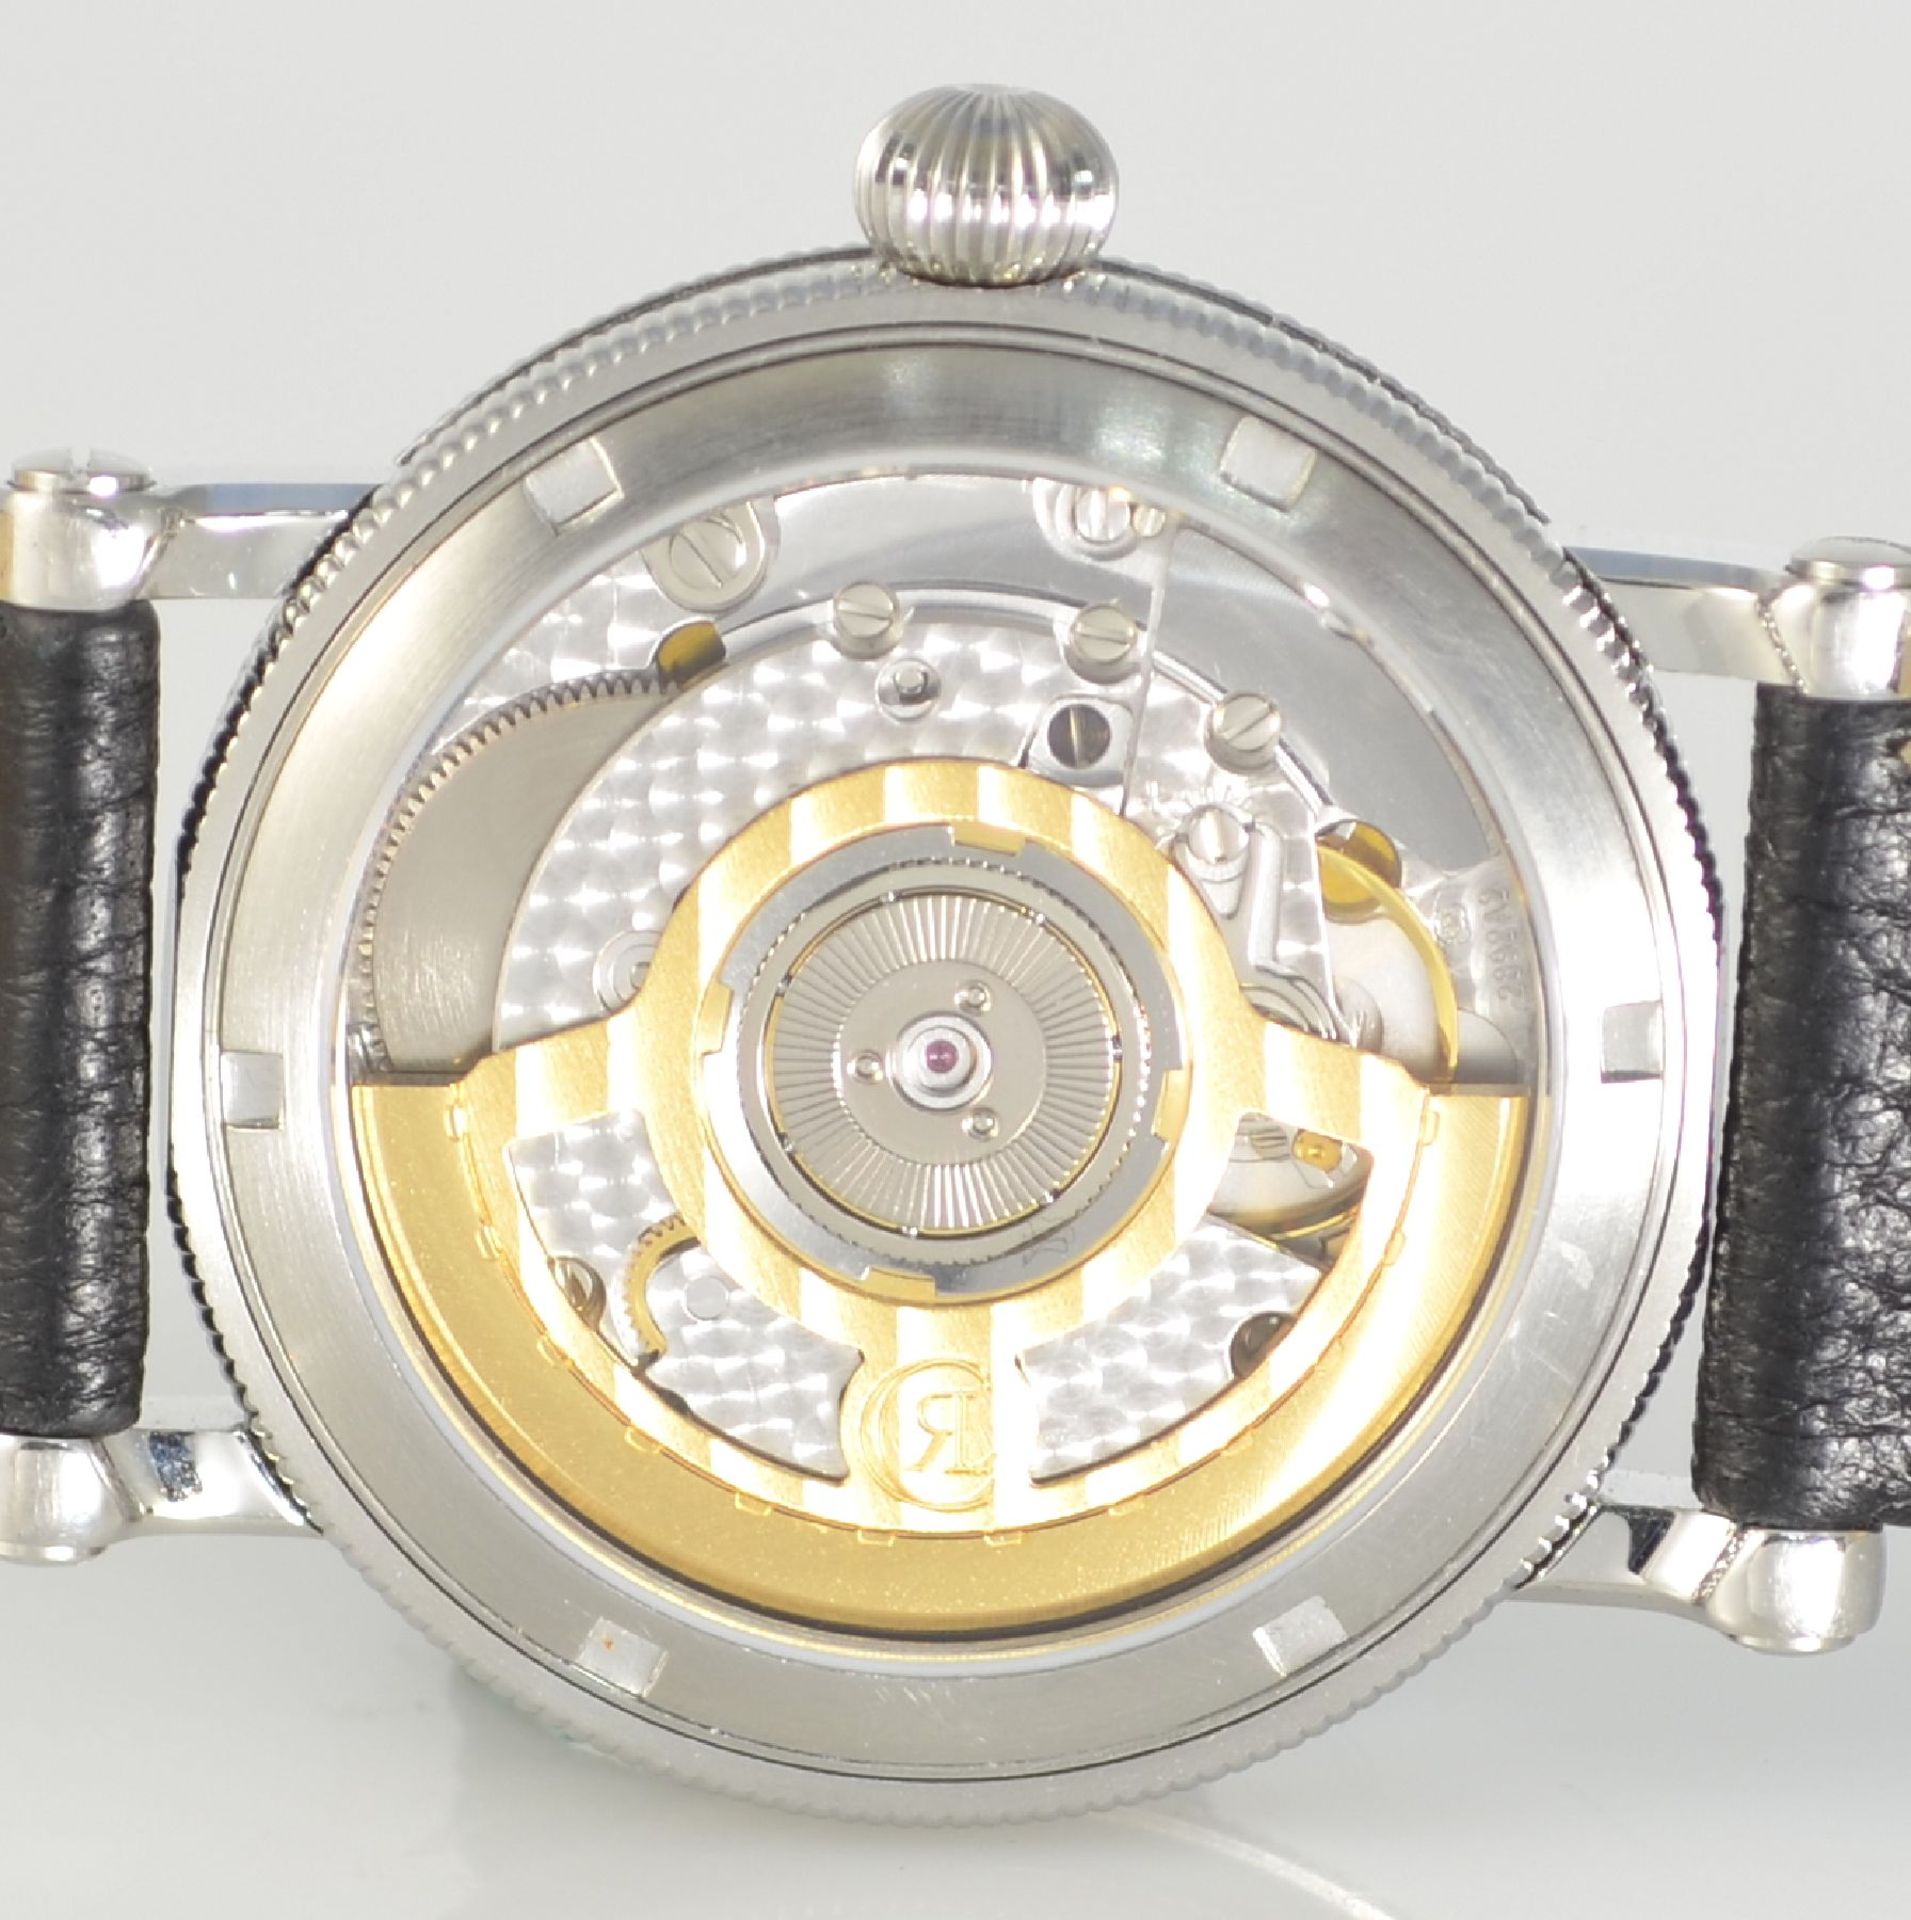 CHRONOSWISS Armbanduhr Serie Kairos, Schweiz um 1992, Automatik, Ref. CH 2823 M, beids. vergl. - Bild 6 aus 8